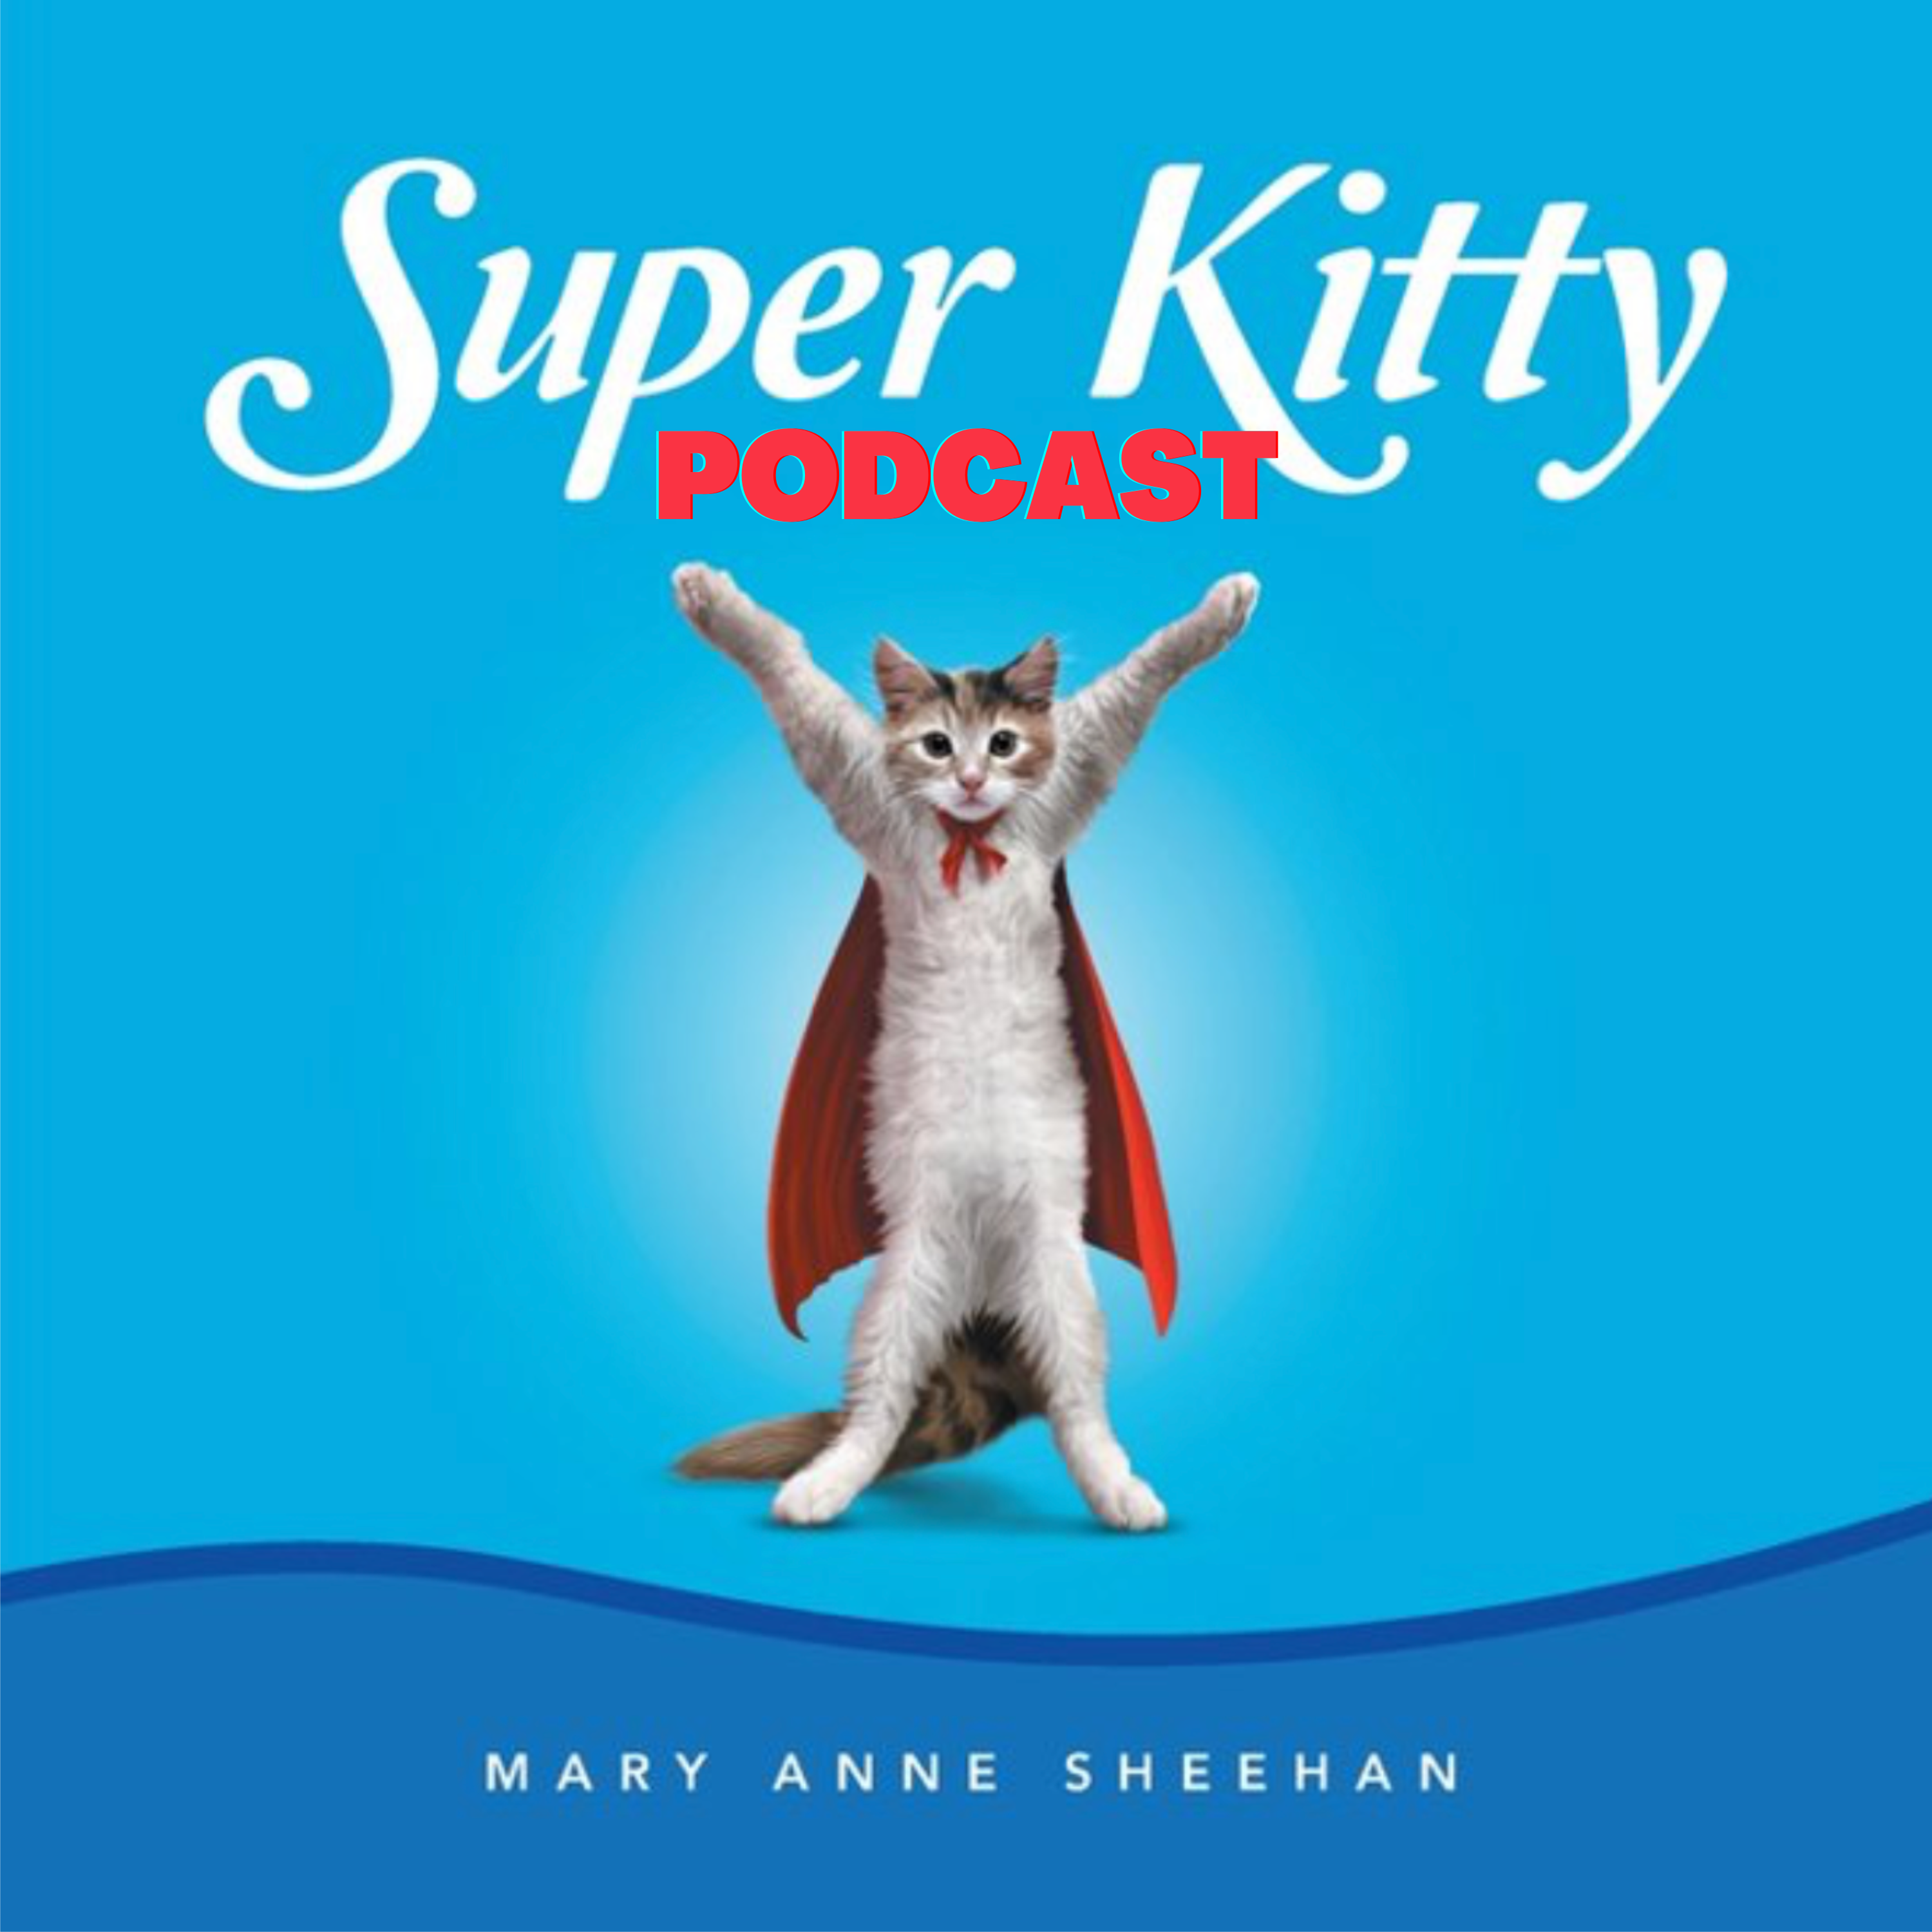 Season 1 Trailer of Super Kitty Podcast